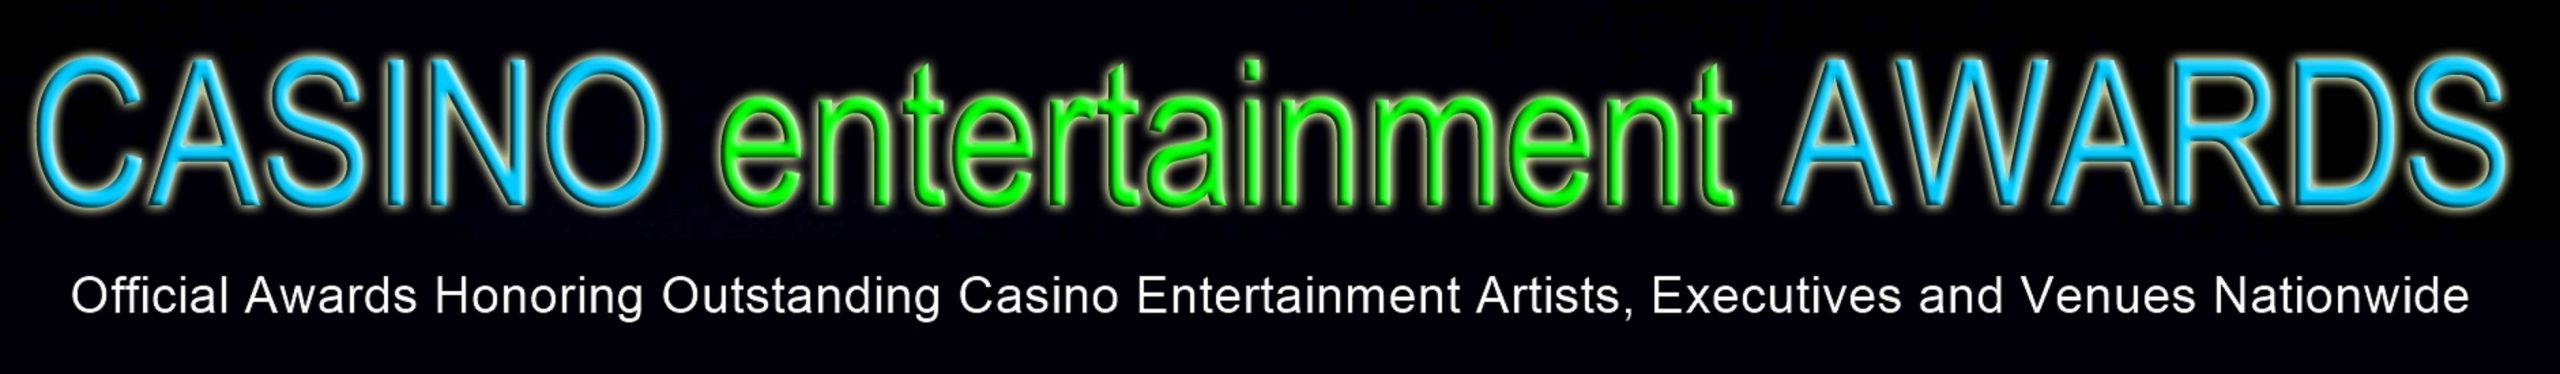 Casino Entertainment Awards Logo